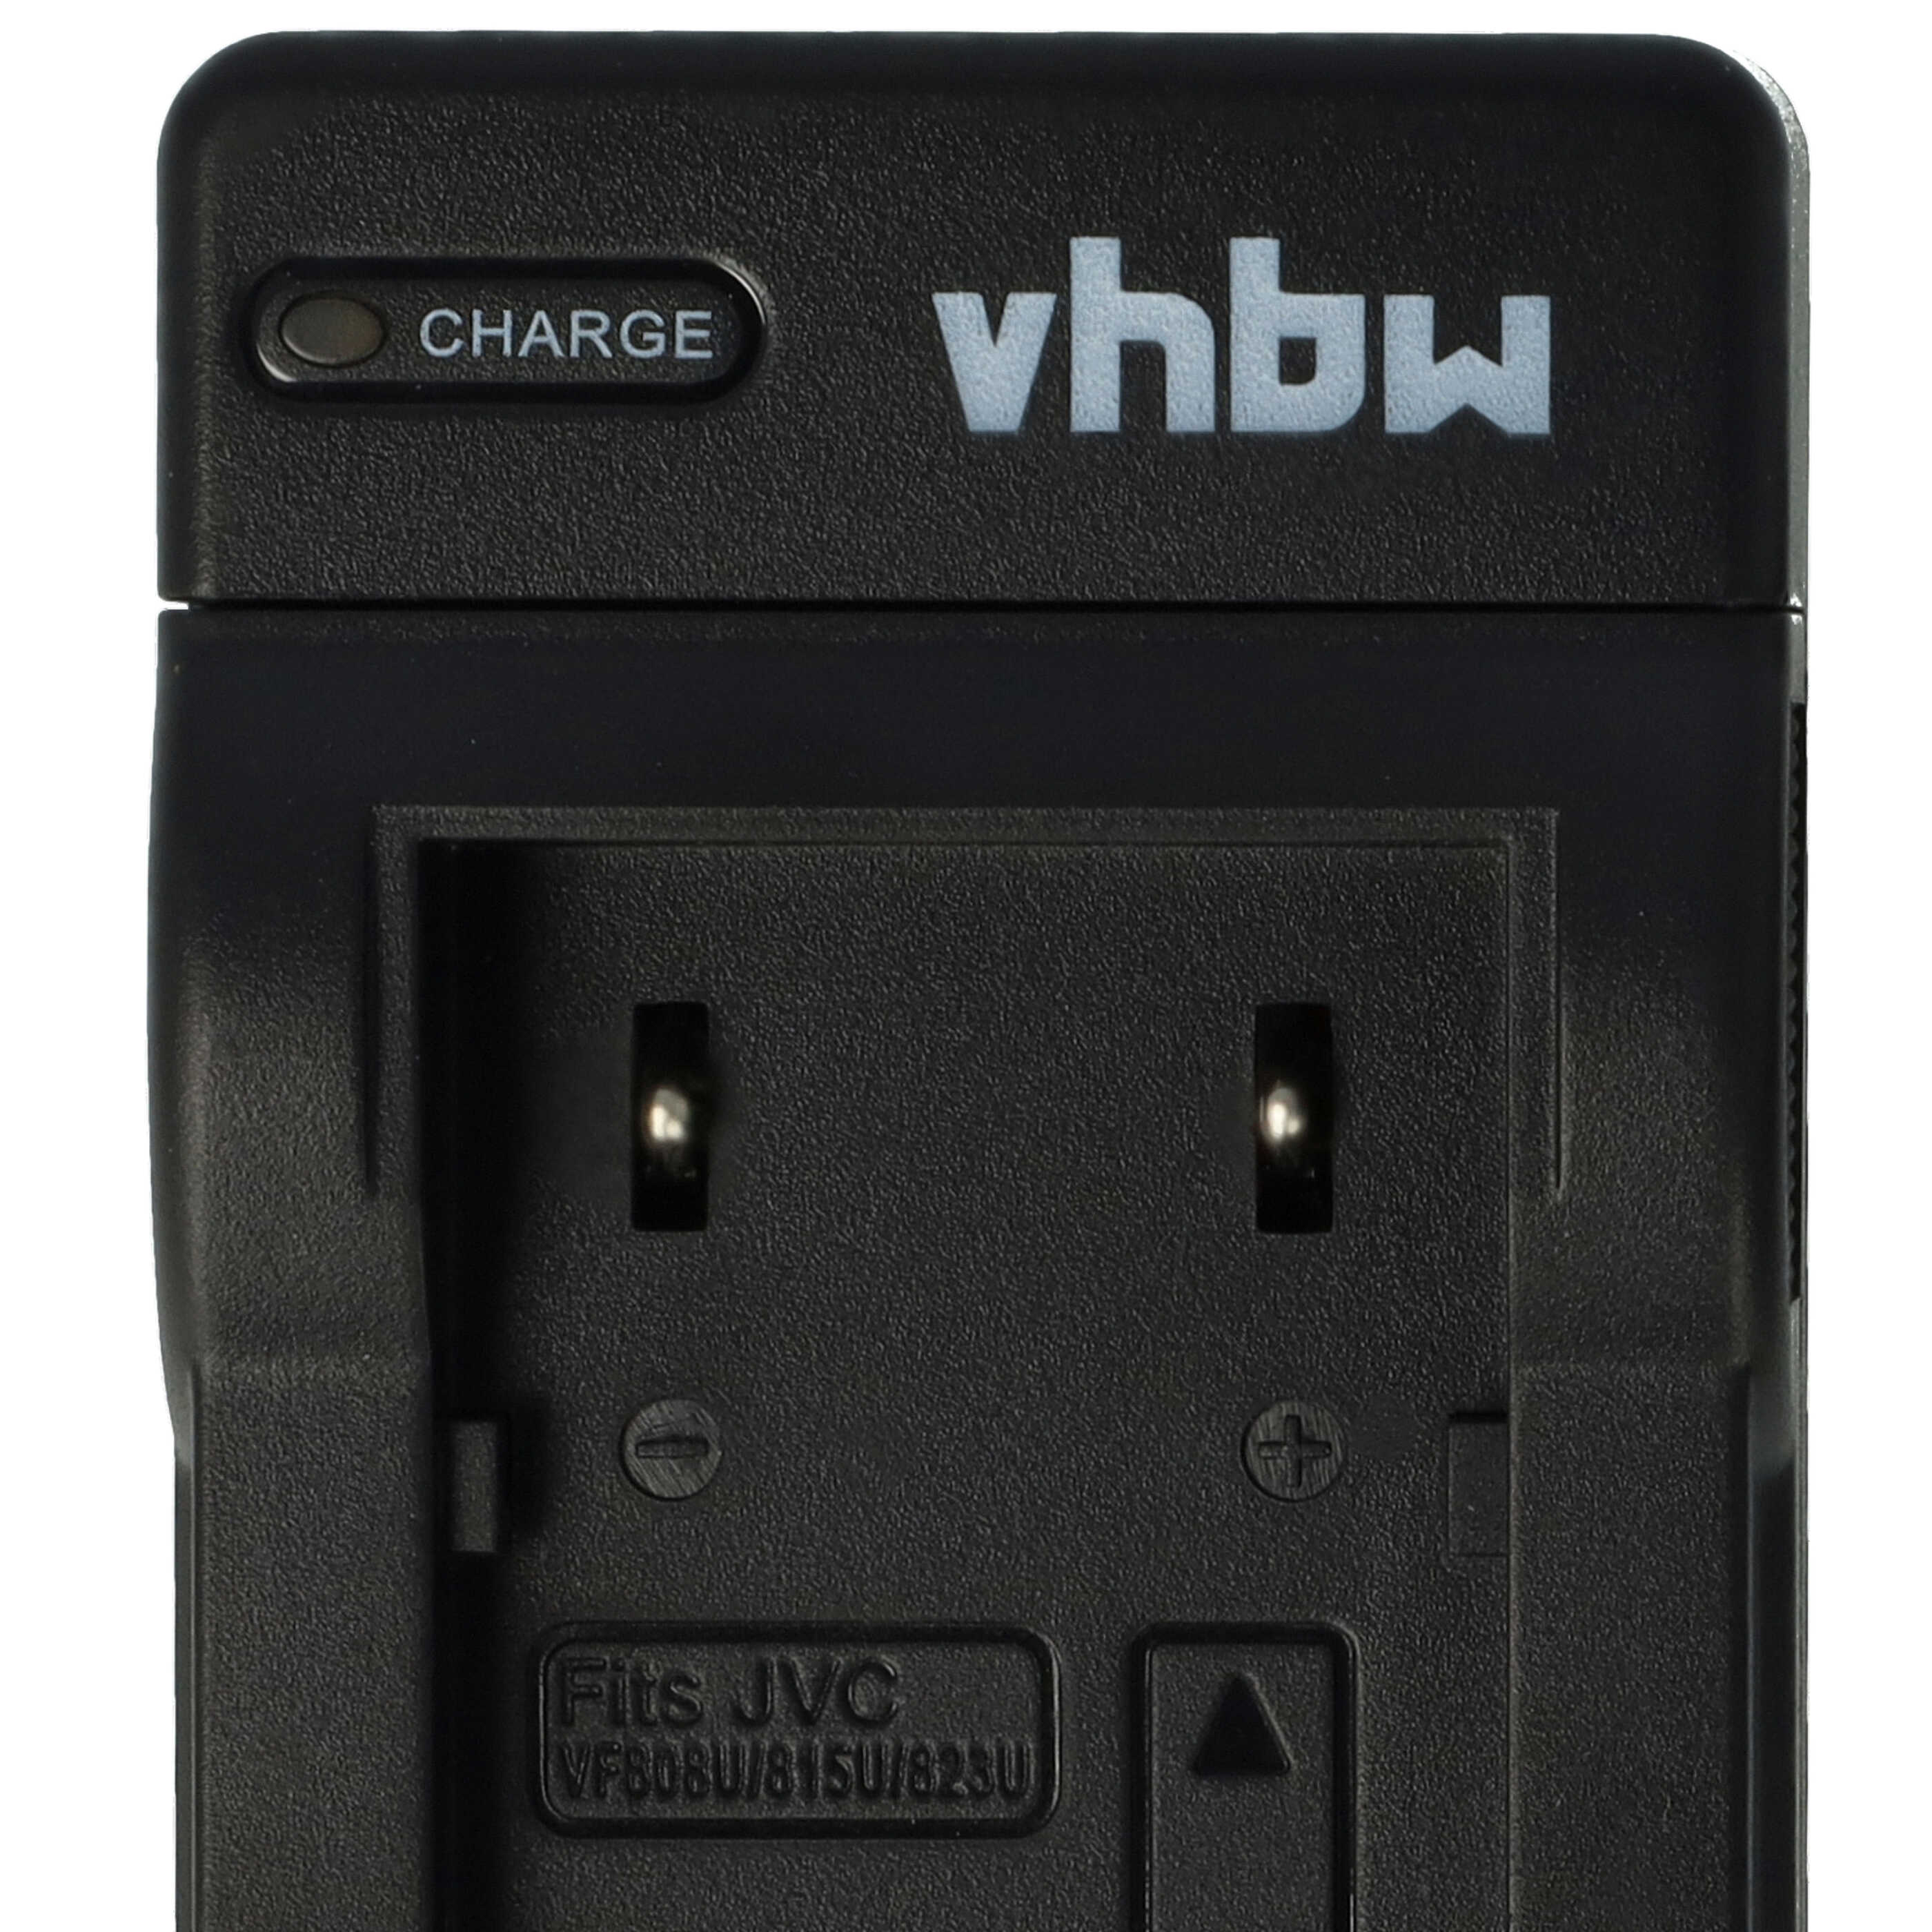 Battery Charger suitable for GR-D720 Camera etc. - 0.5 A, 8.4 V